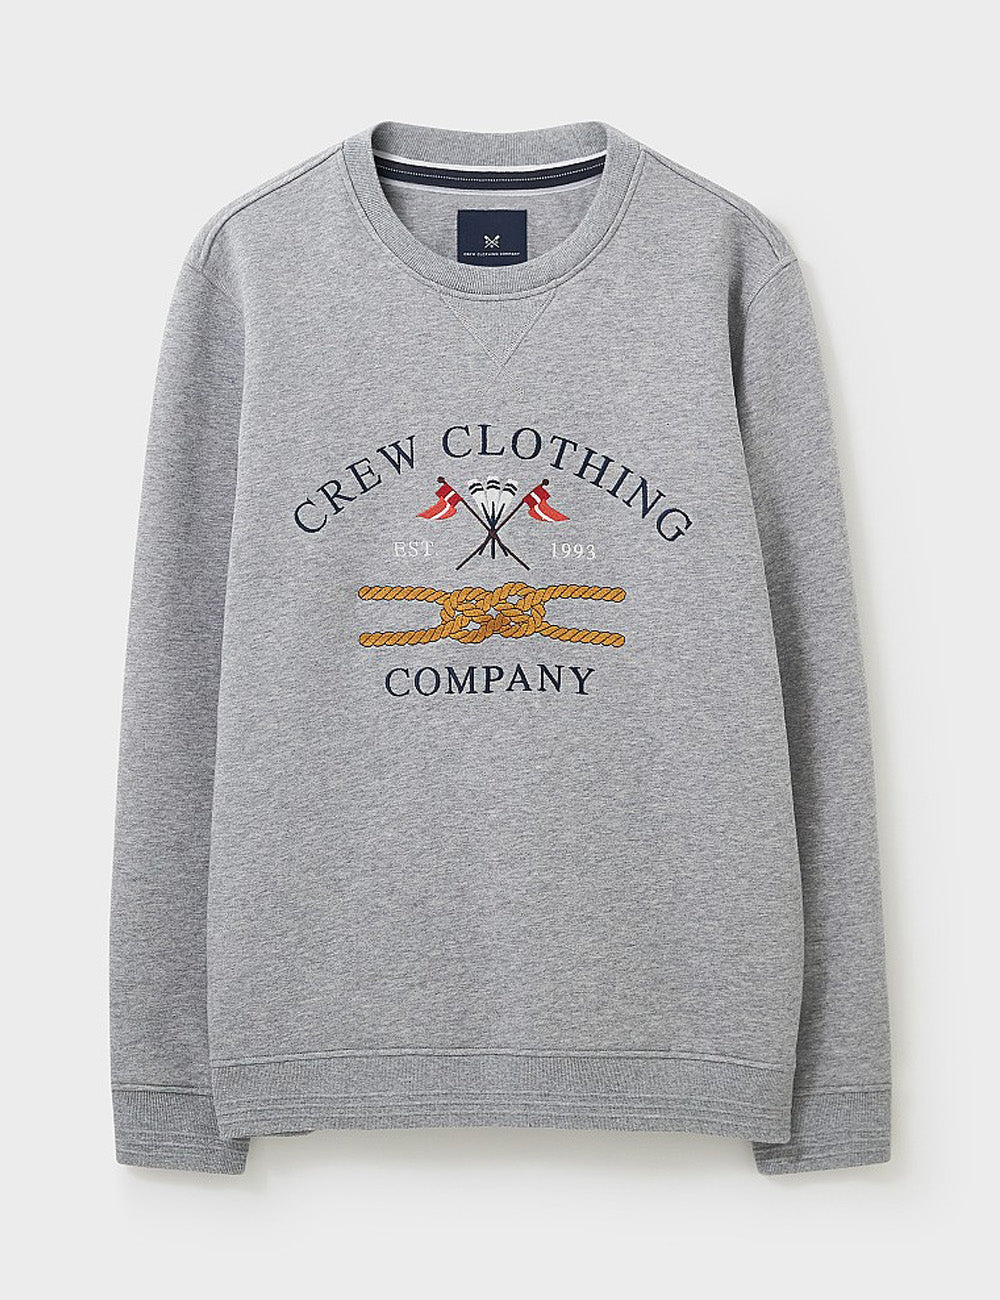 Crew Clothing Worbridge Crew Neck Sweatshirt - Grey